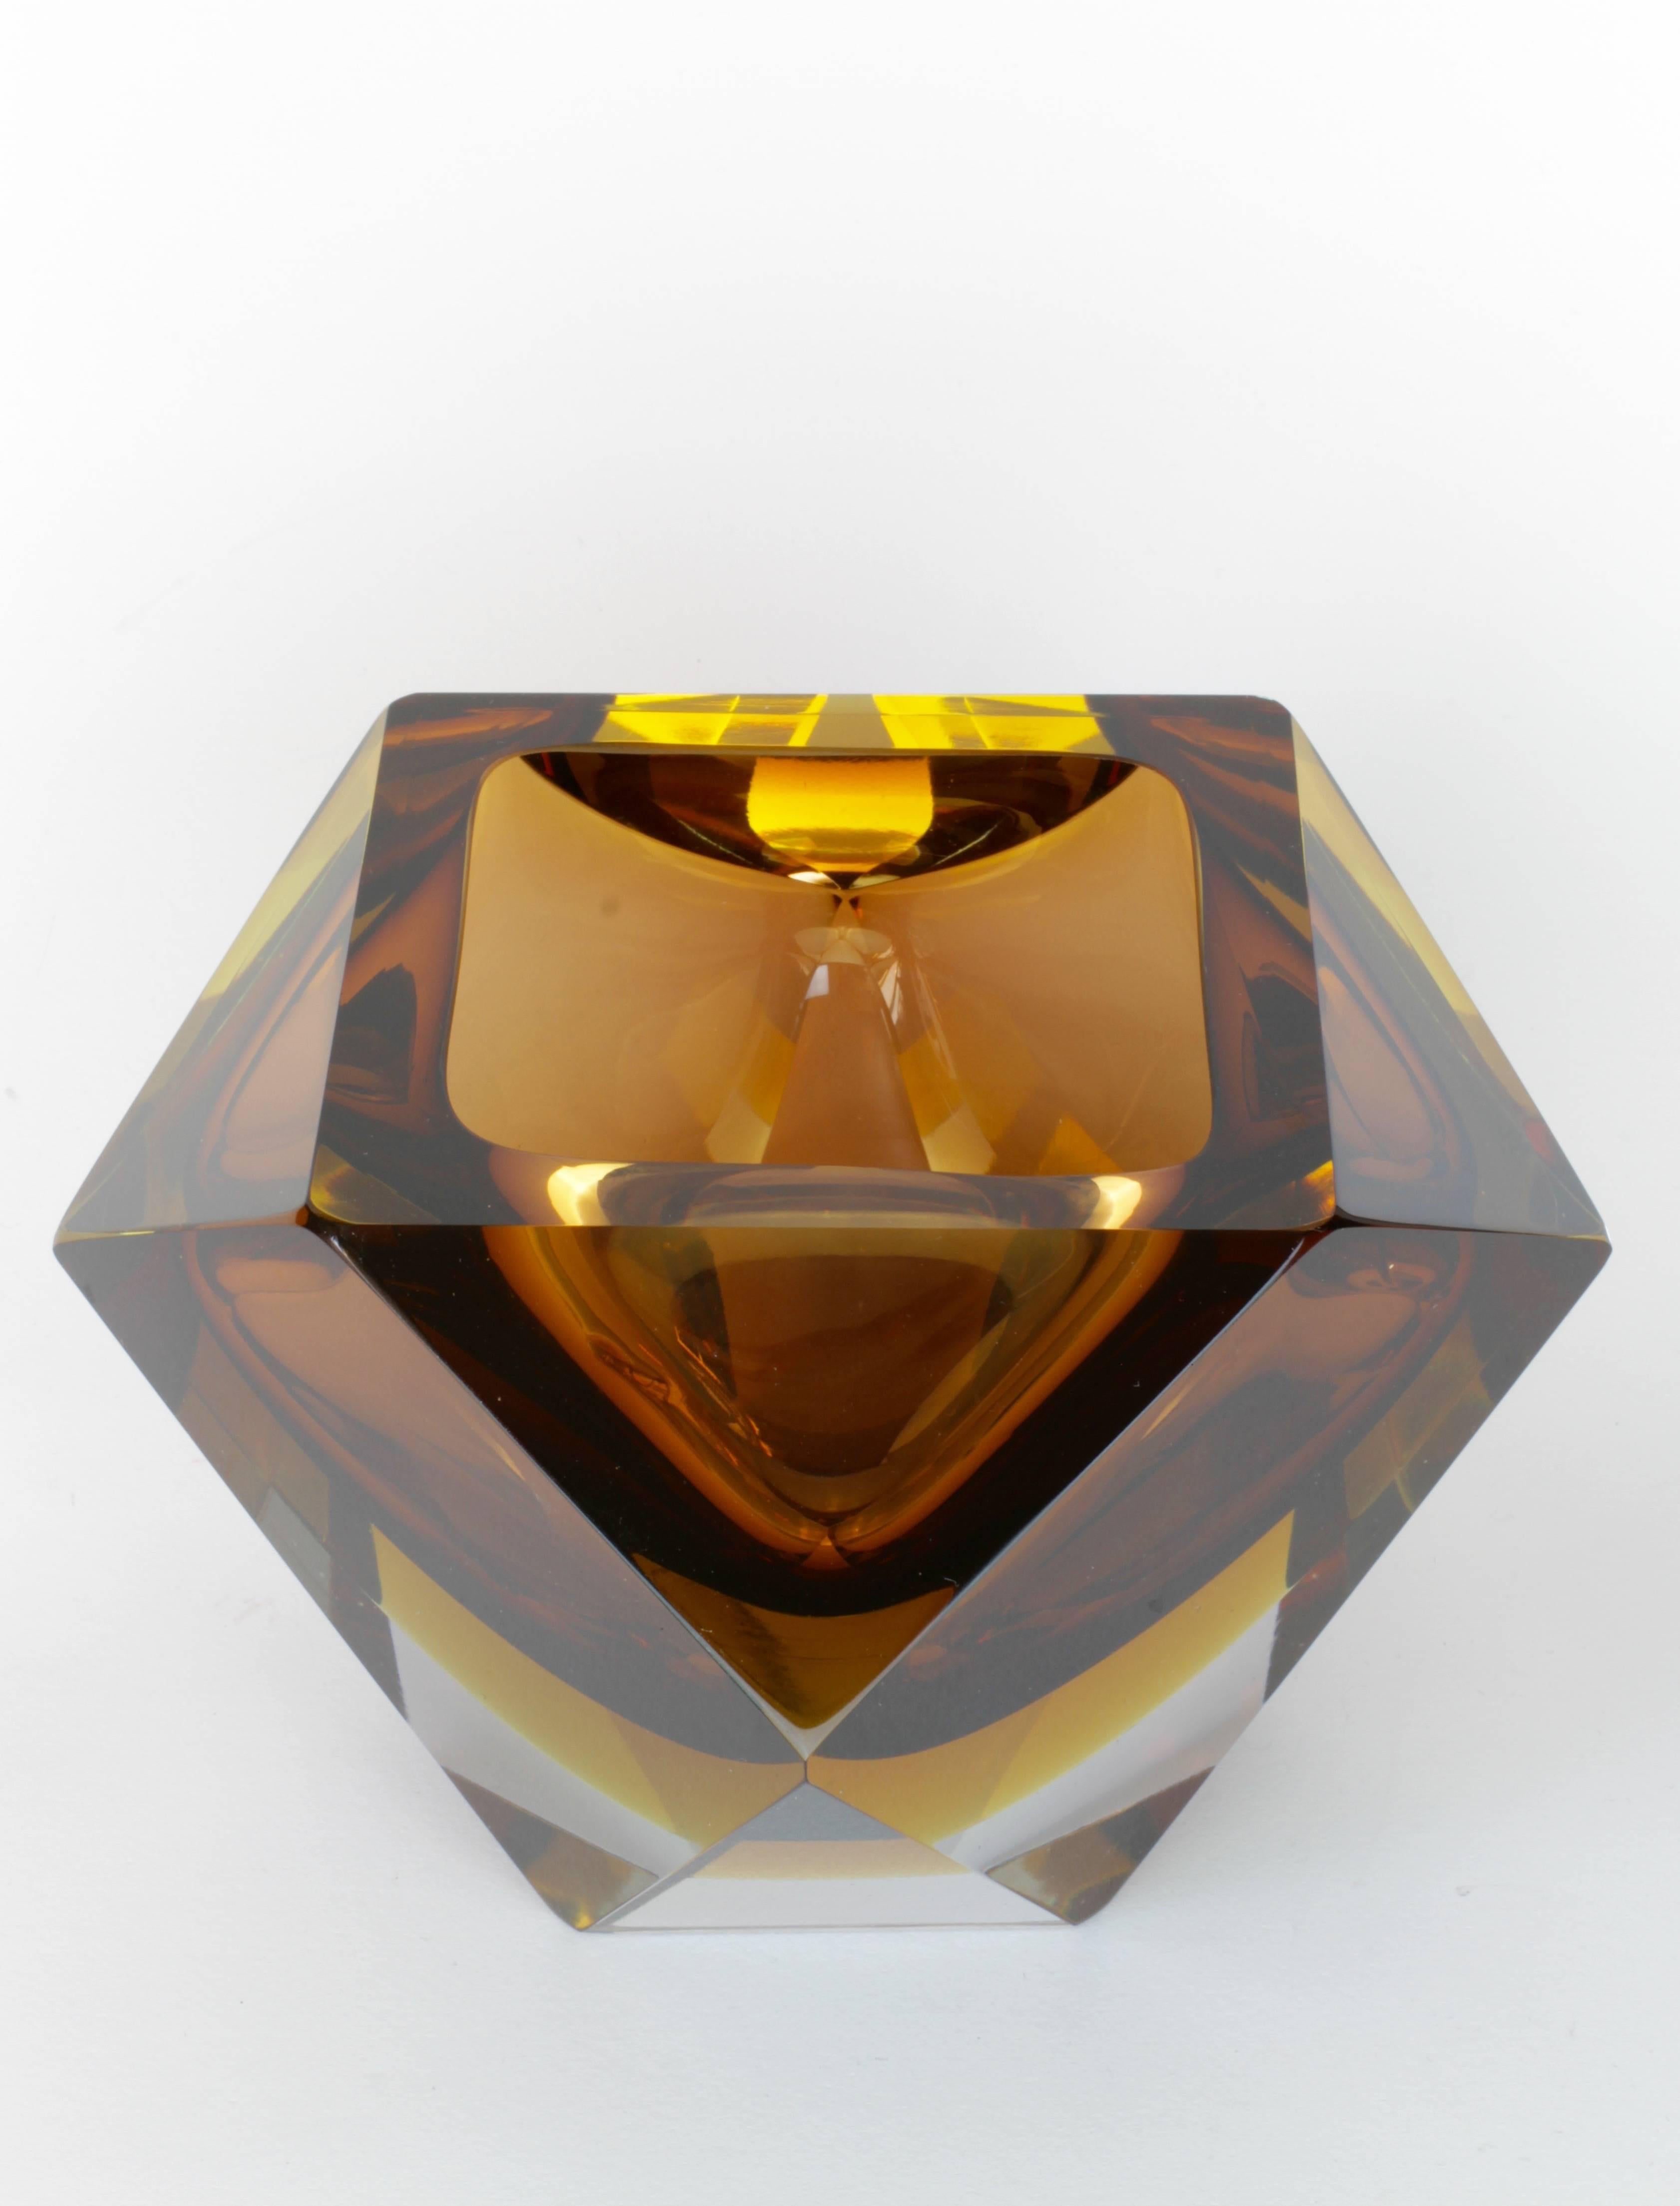 Monumental Huge Italian Diamond Cut Faceted Murano Glass Bowl For Sale 1